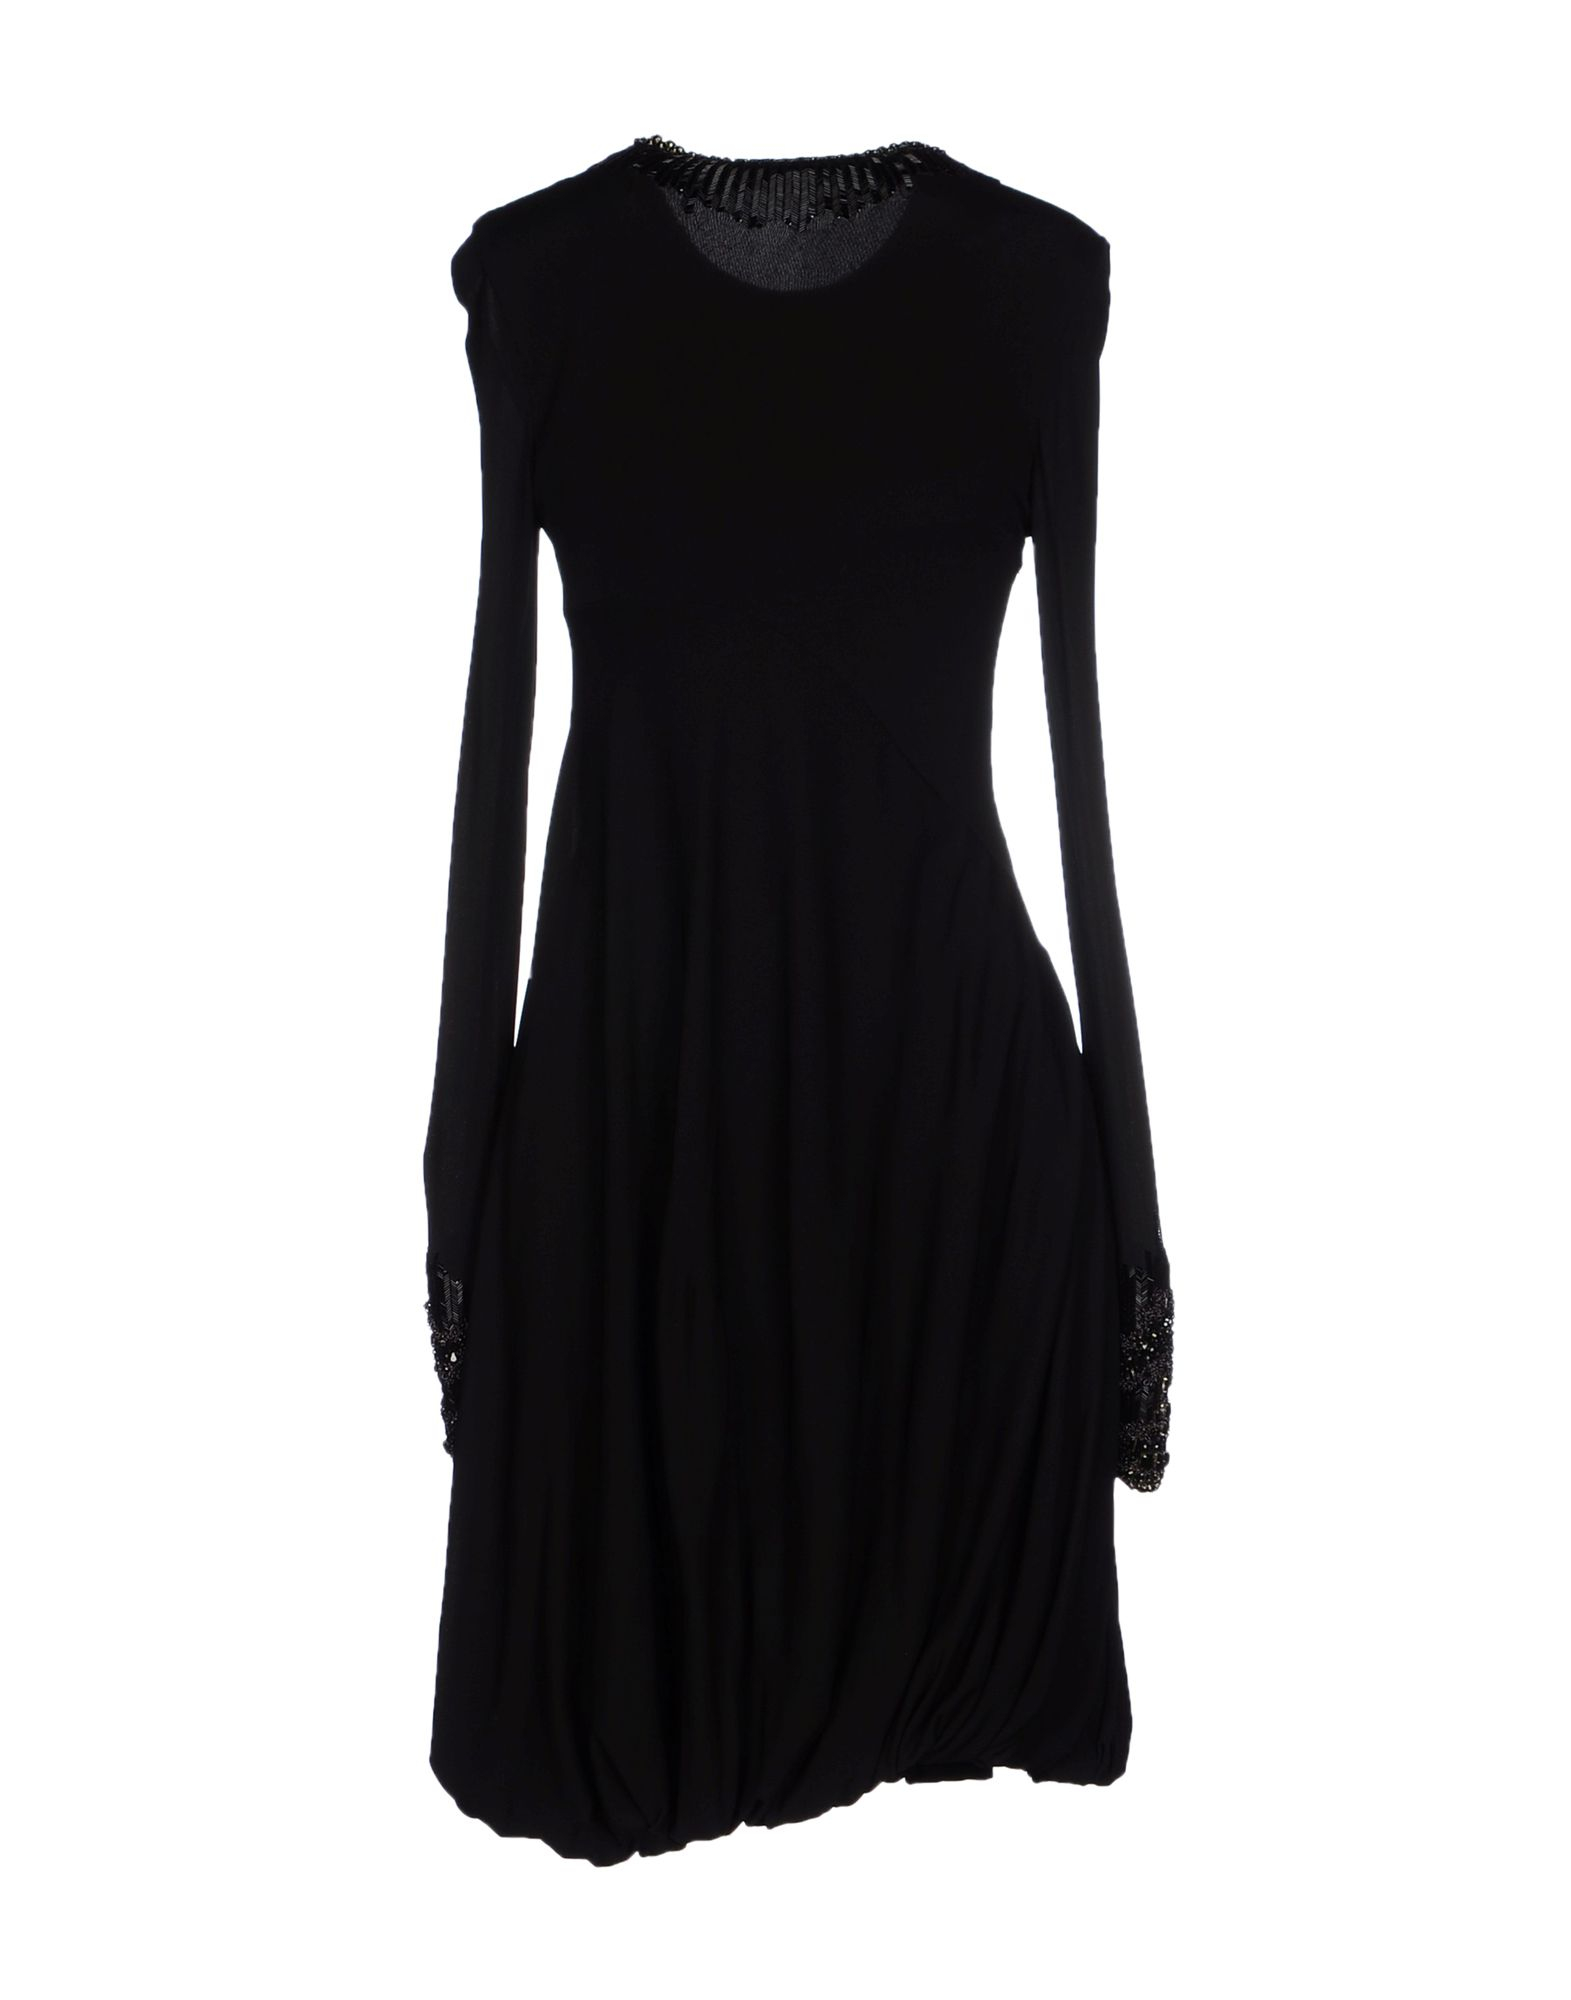 Lyst - Alexander mcqueen Short Dress in Black